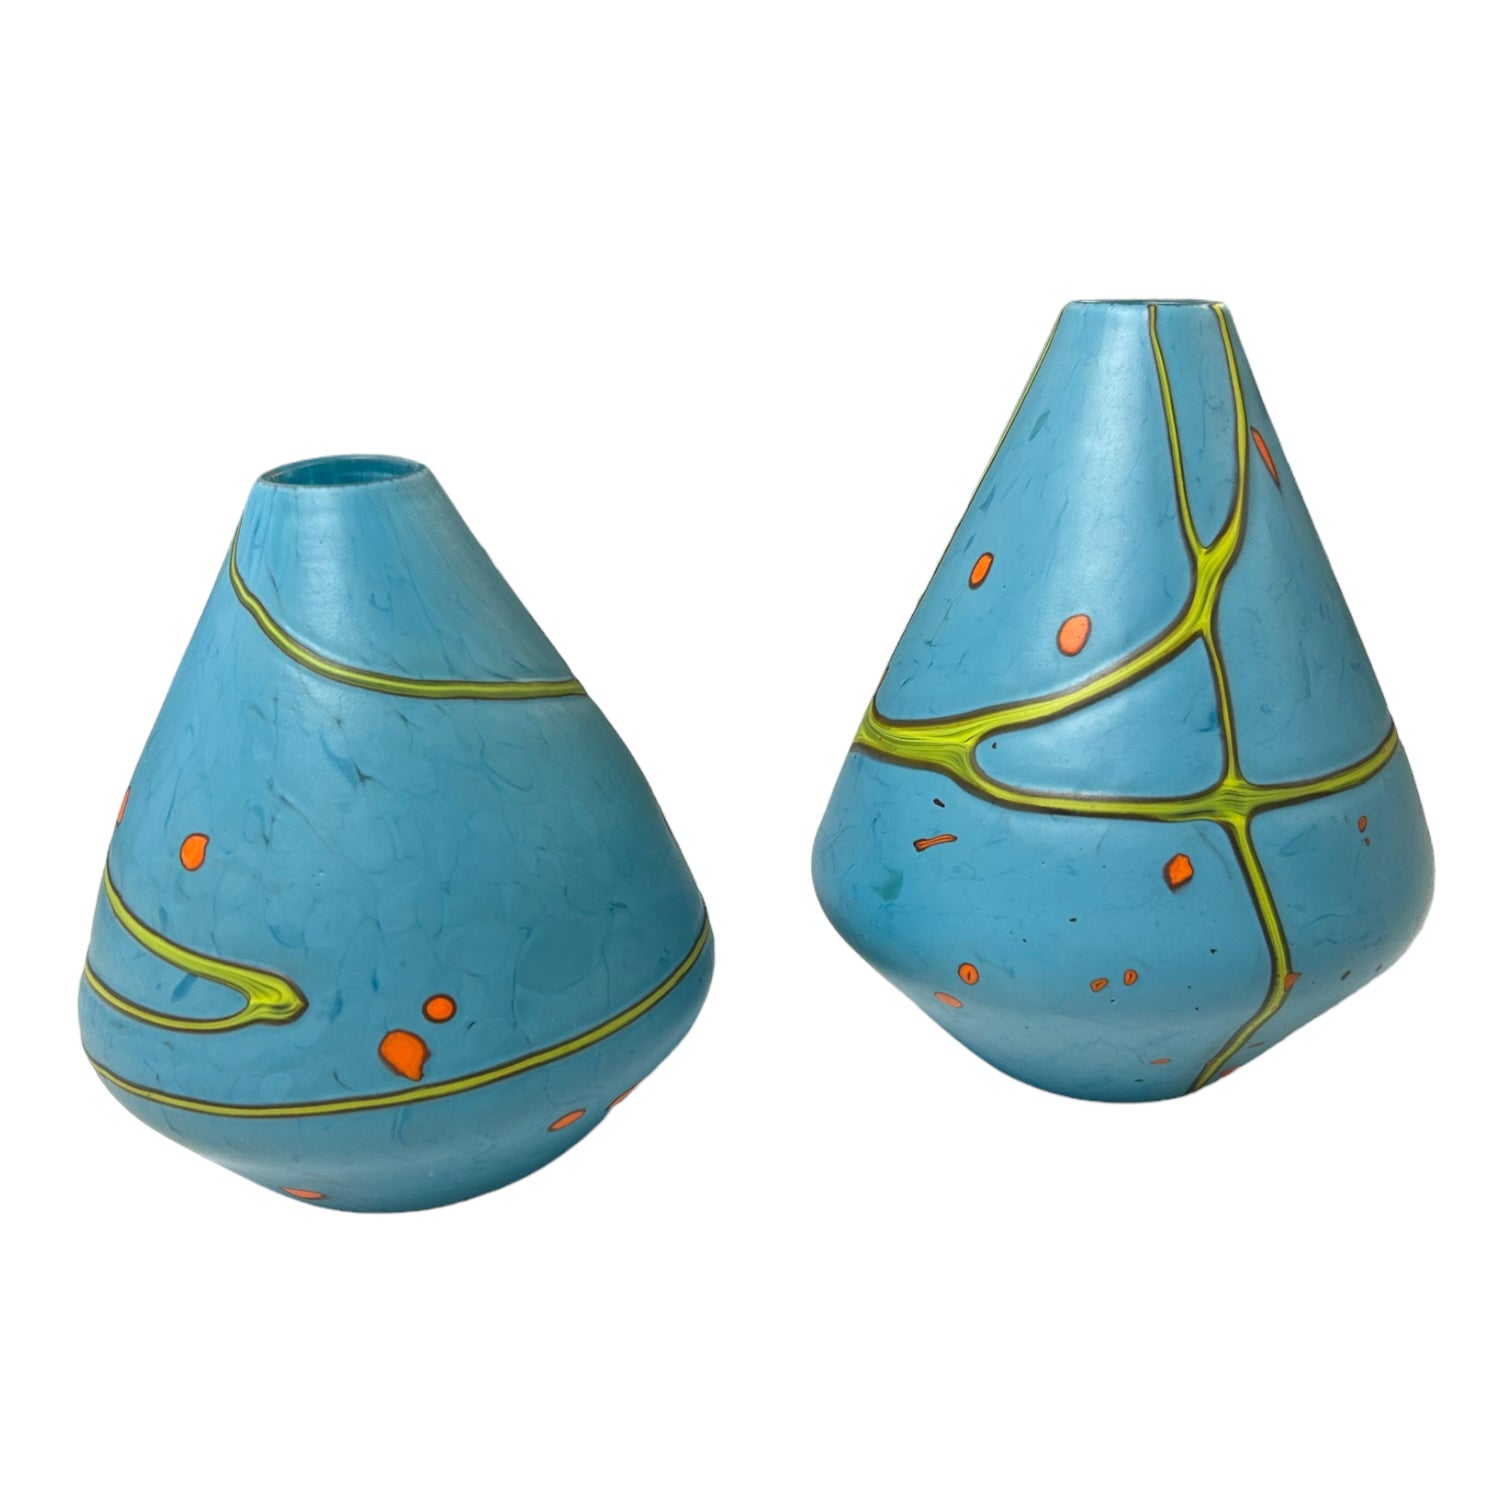 Chrysocollas - Small Vase